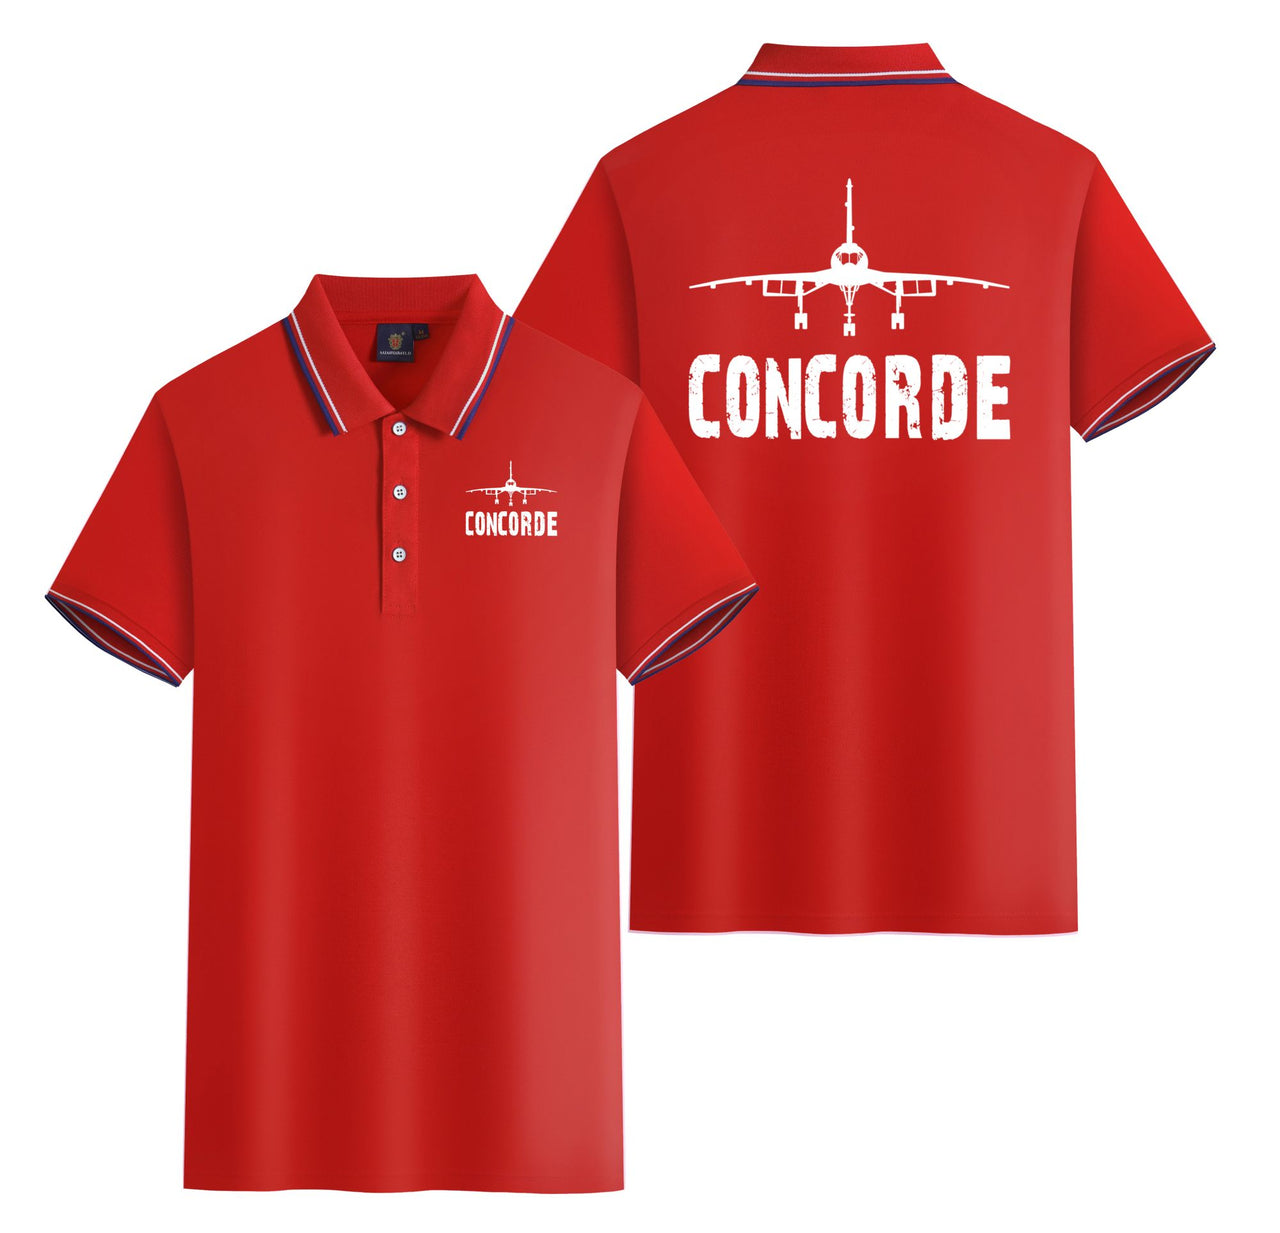 Concorde & Plane Designed Stylish Polo T-Shirts (Double-Side)